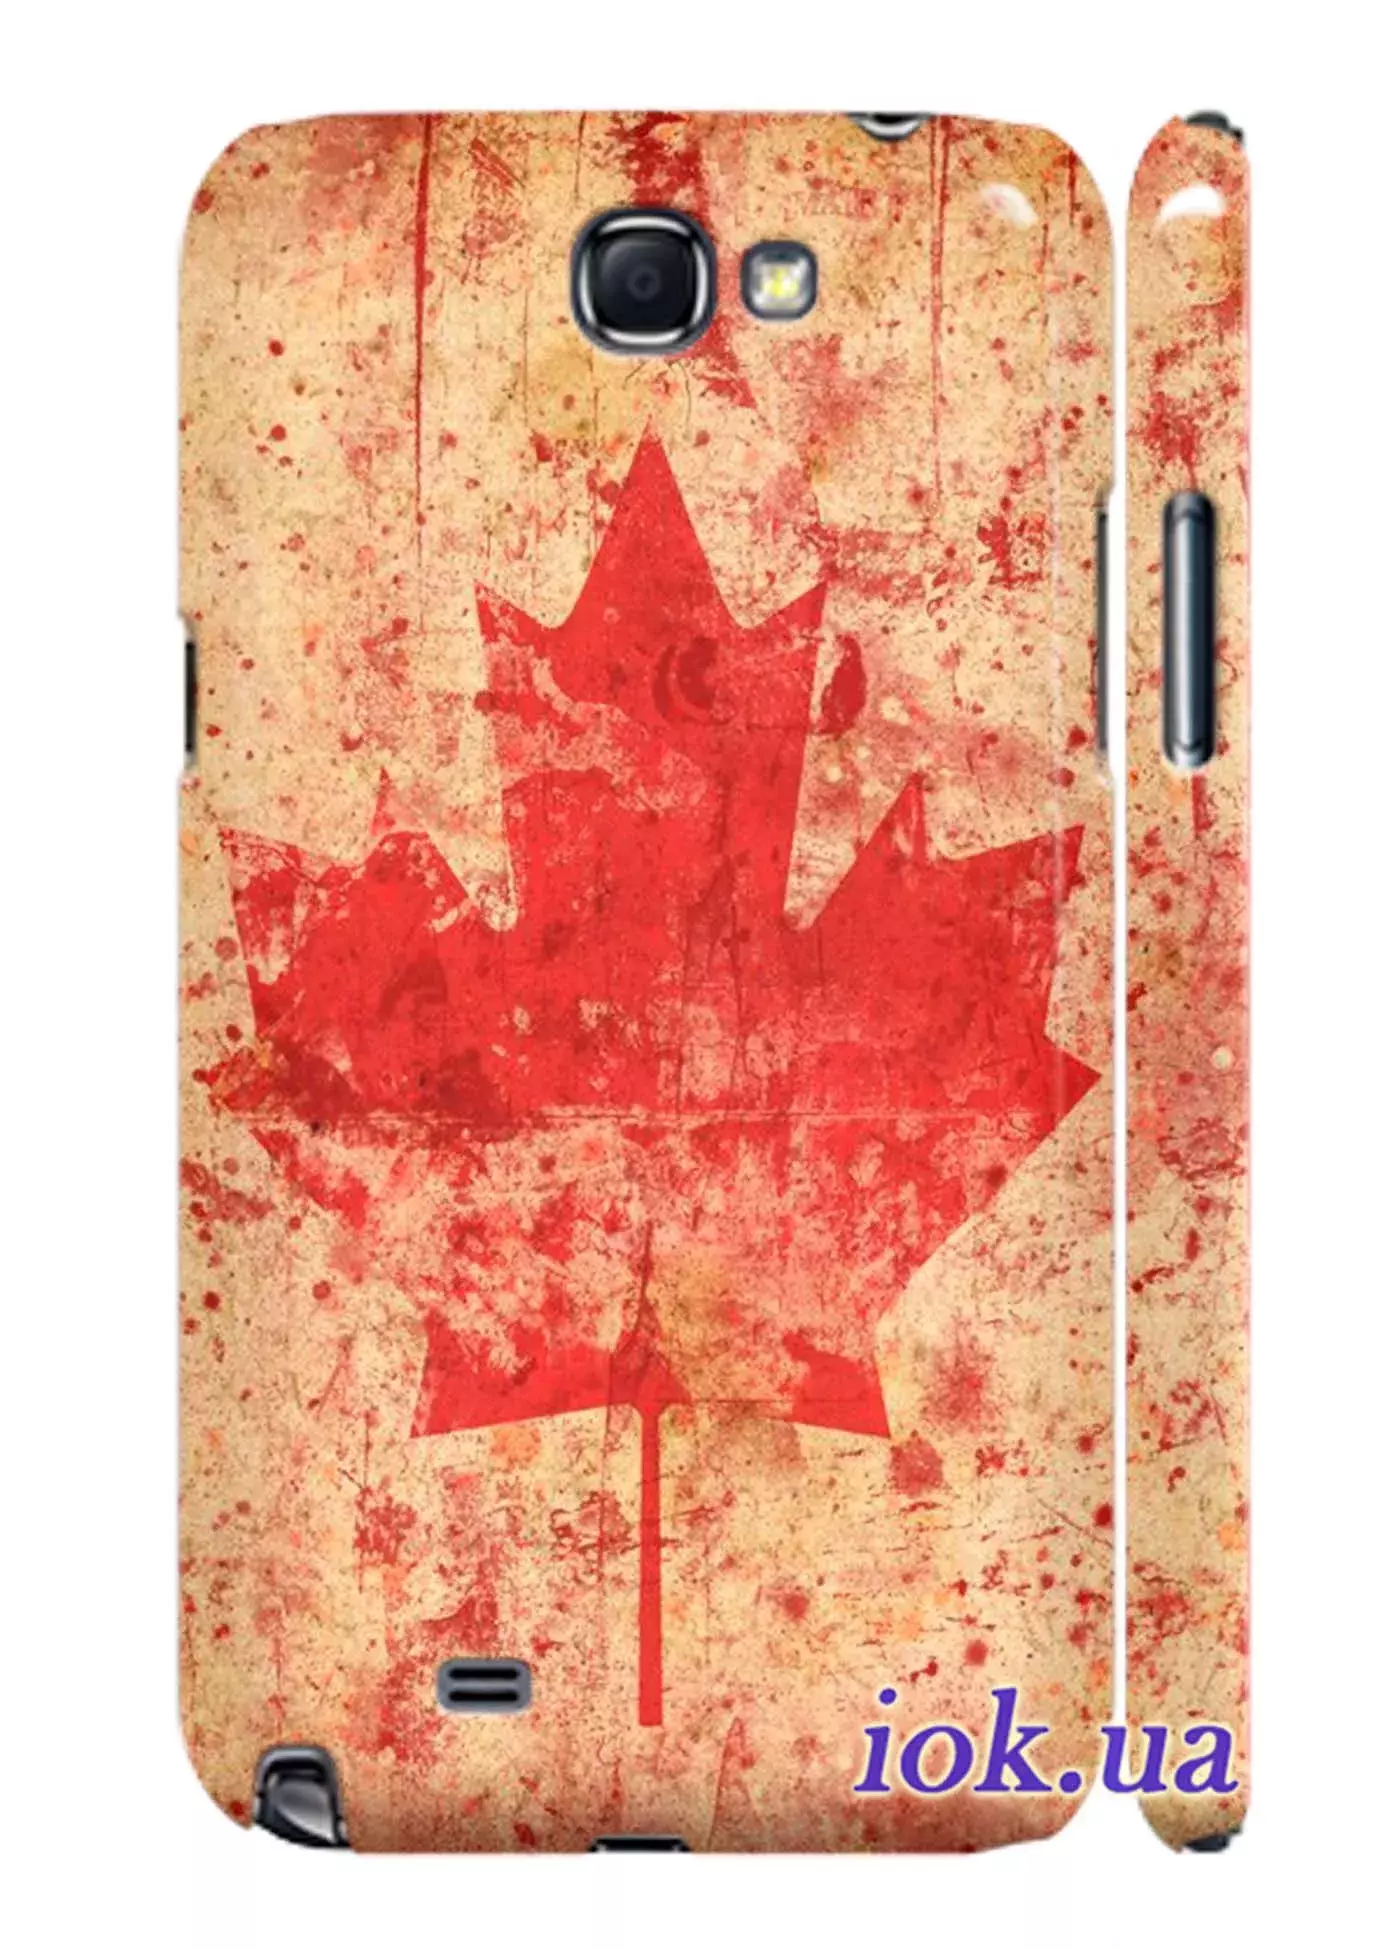 Чехол для Galaxy Note 2 - Канада